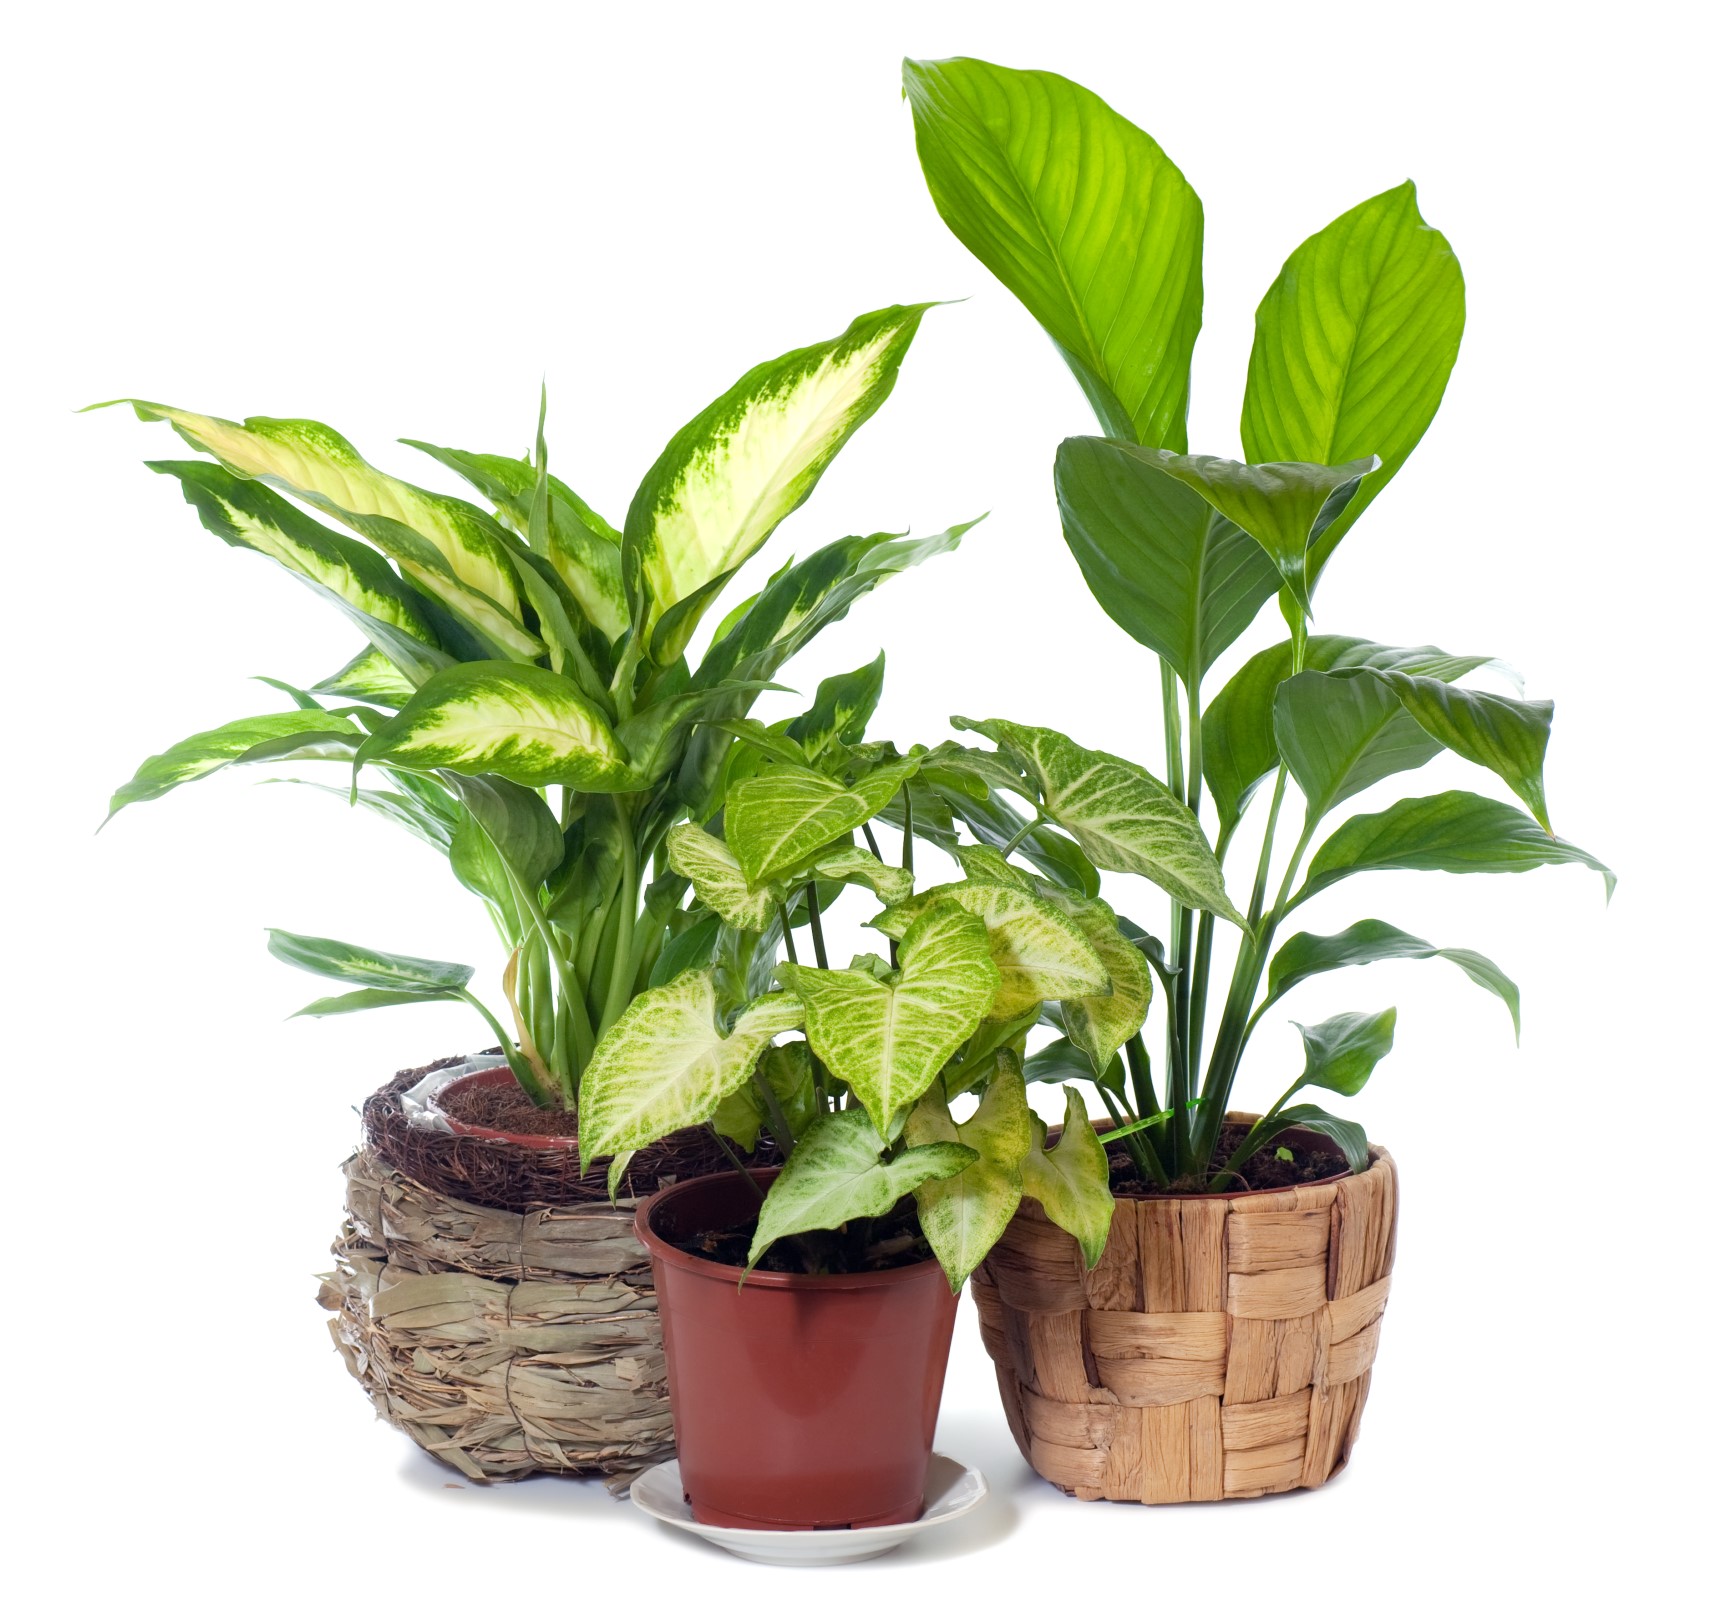 Tre forskjellige stueplanter, alle med grønne blader. To med ovale blader, grønne kanter og hvitgule blader og en med ovale, grønne blader